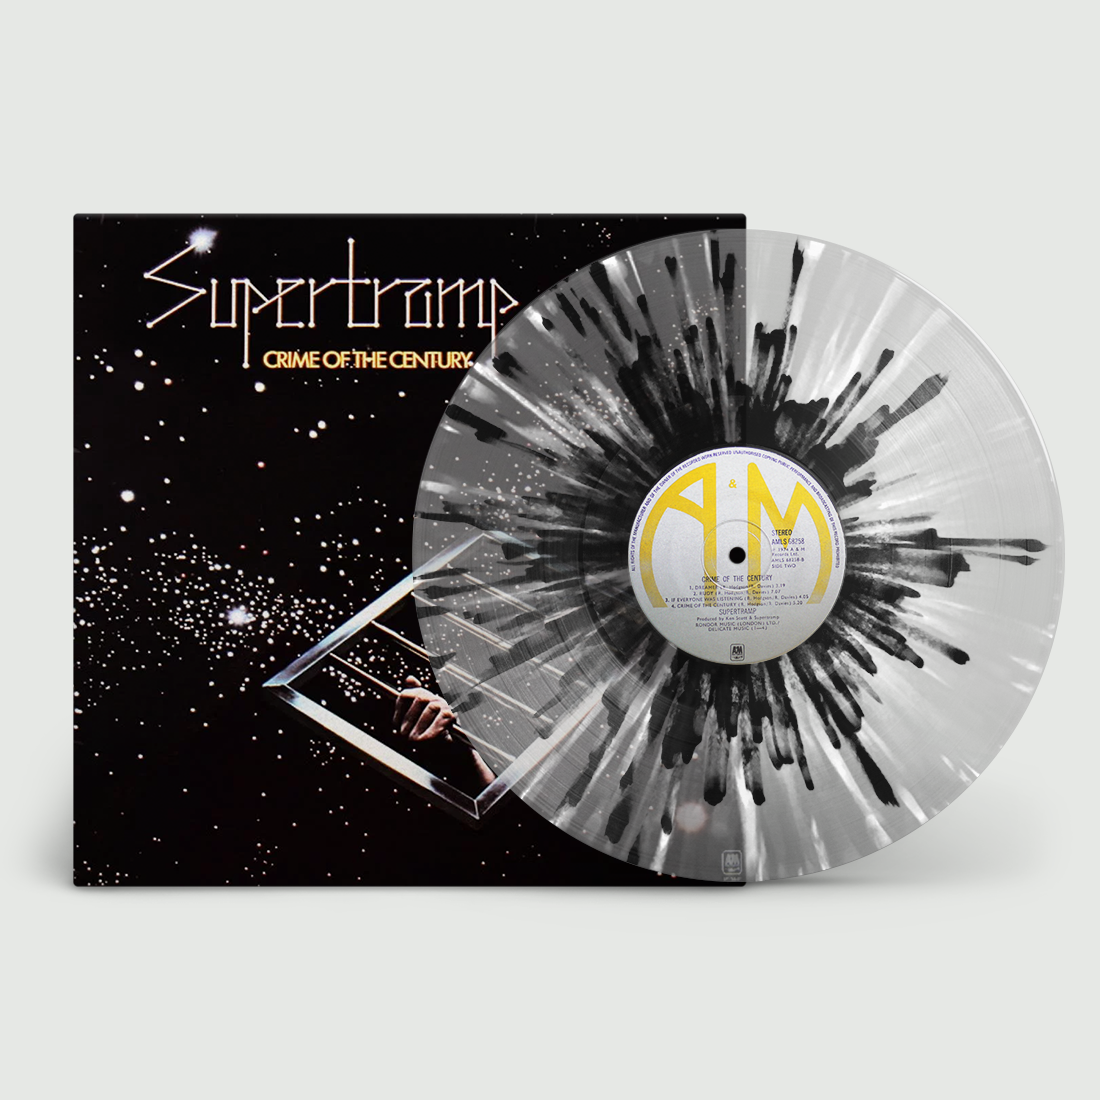 Supertramp - Crime Of The Century: Exclusive Translucent Grey with White + Black Splatter Vinyl LP